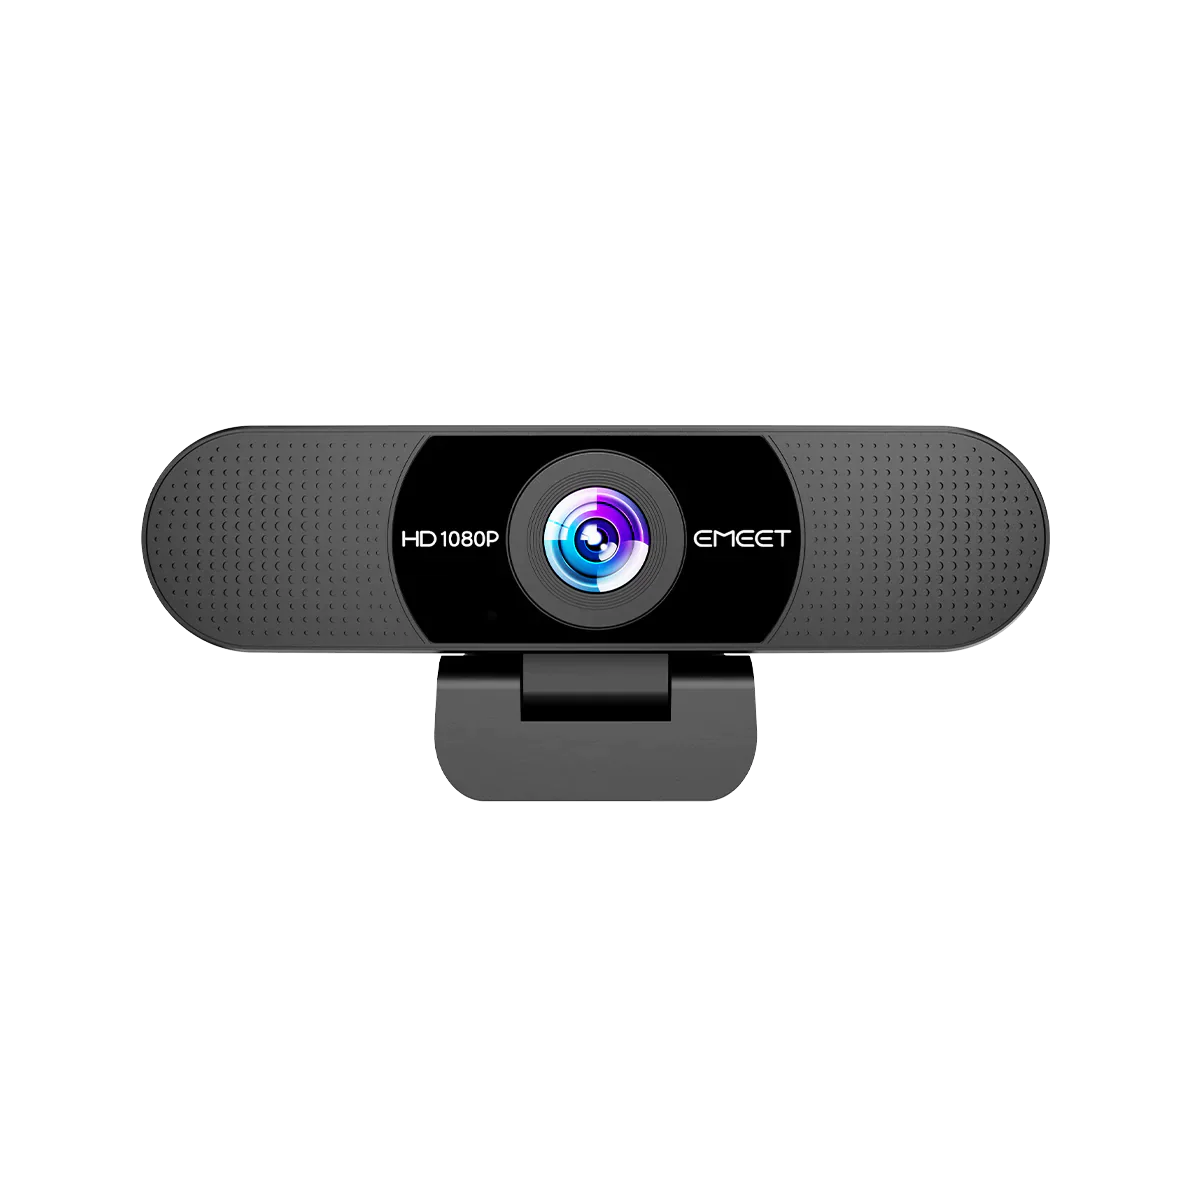 EMEET SmartCam C960 Basic FHD 1080P Webcam with Dual Microphones